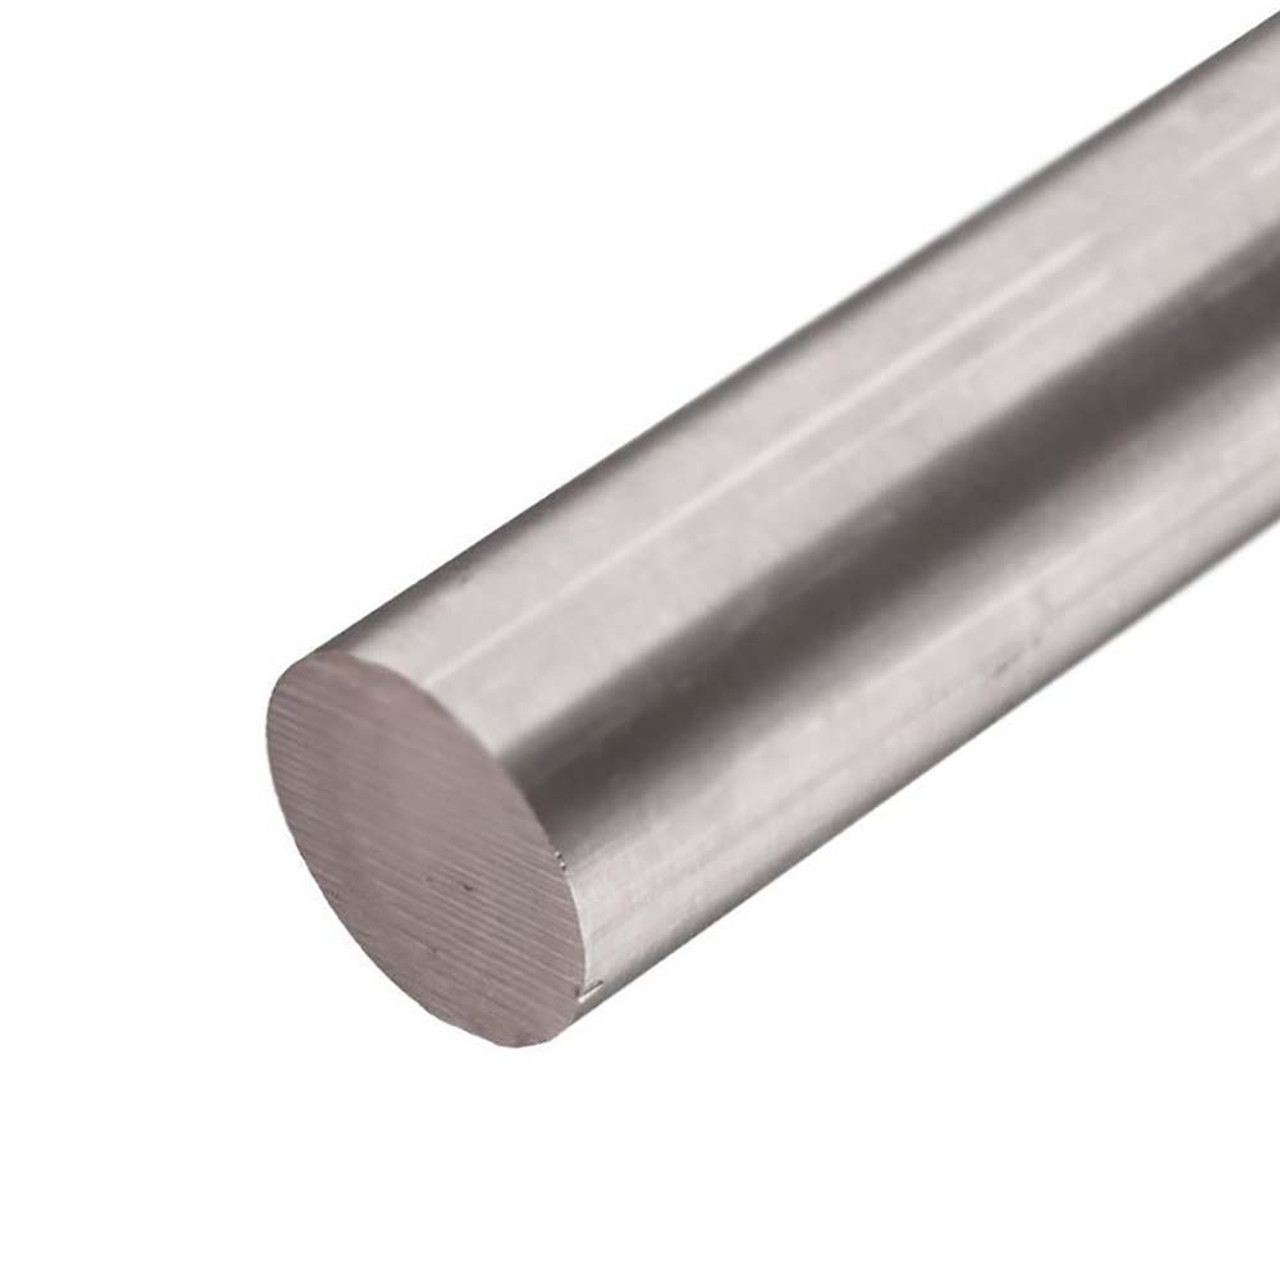 1.750 (1-3/4 inch) x 18 inches, 6061-T6511 Aluminum Round Rod